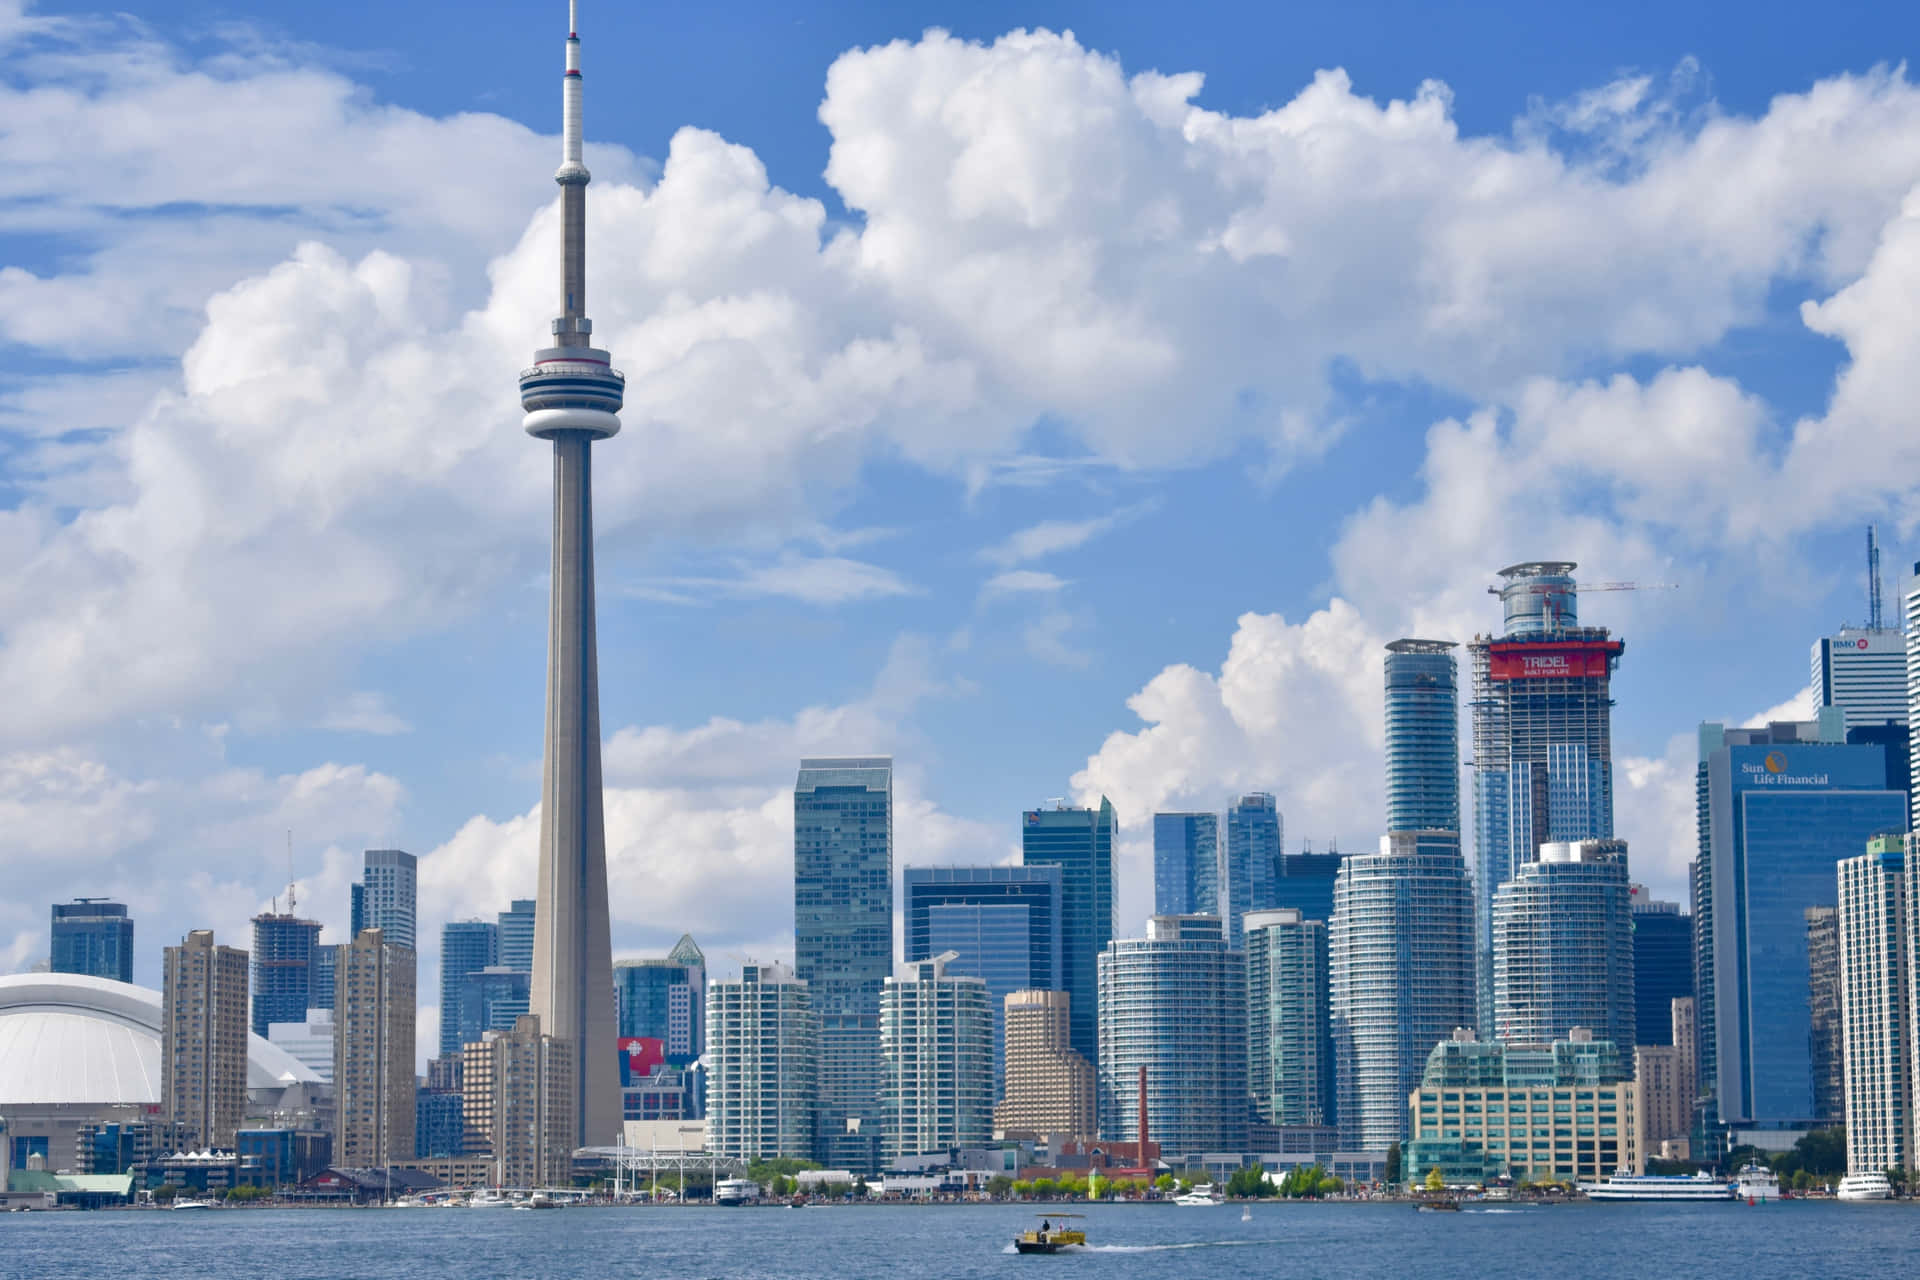 The stunning skyline of Toronto, Canada